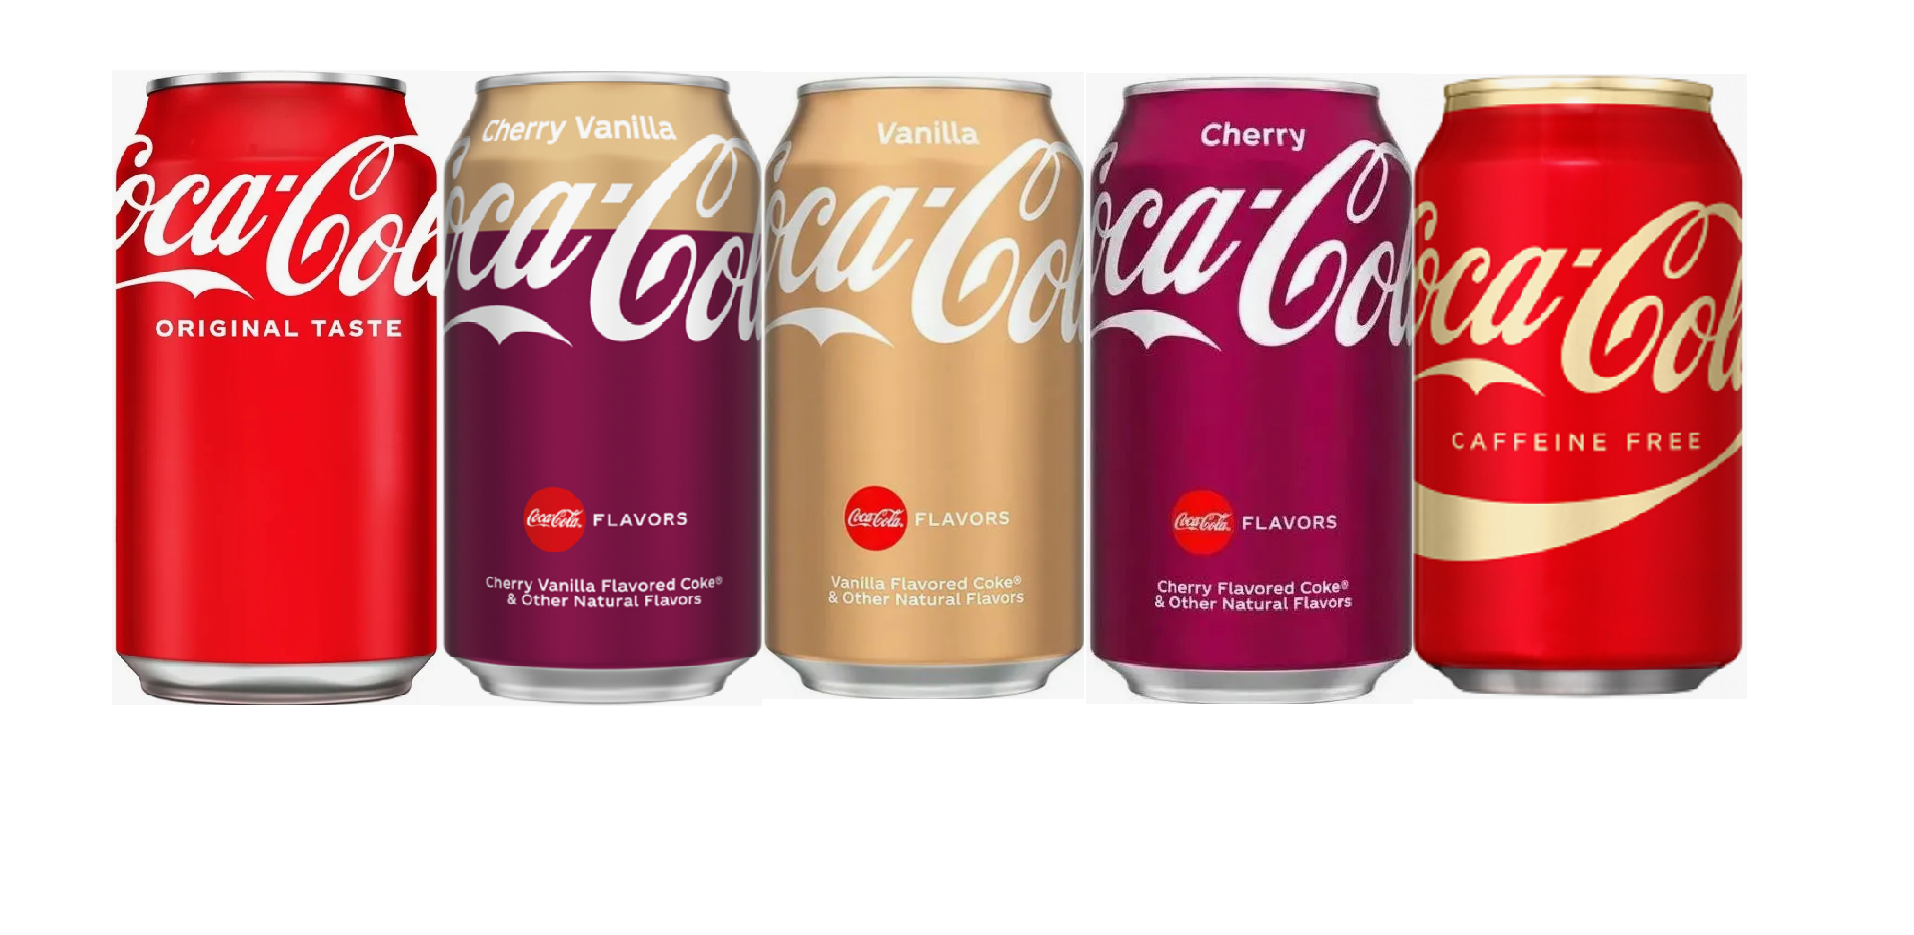 Набор Coca-Cola Original (Original, Cherry-Vanilla, Vanilla , Caffein Free, Cherry), ( 5 по 355 мл). США